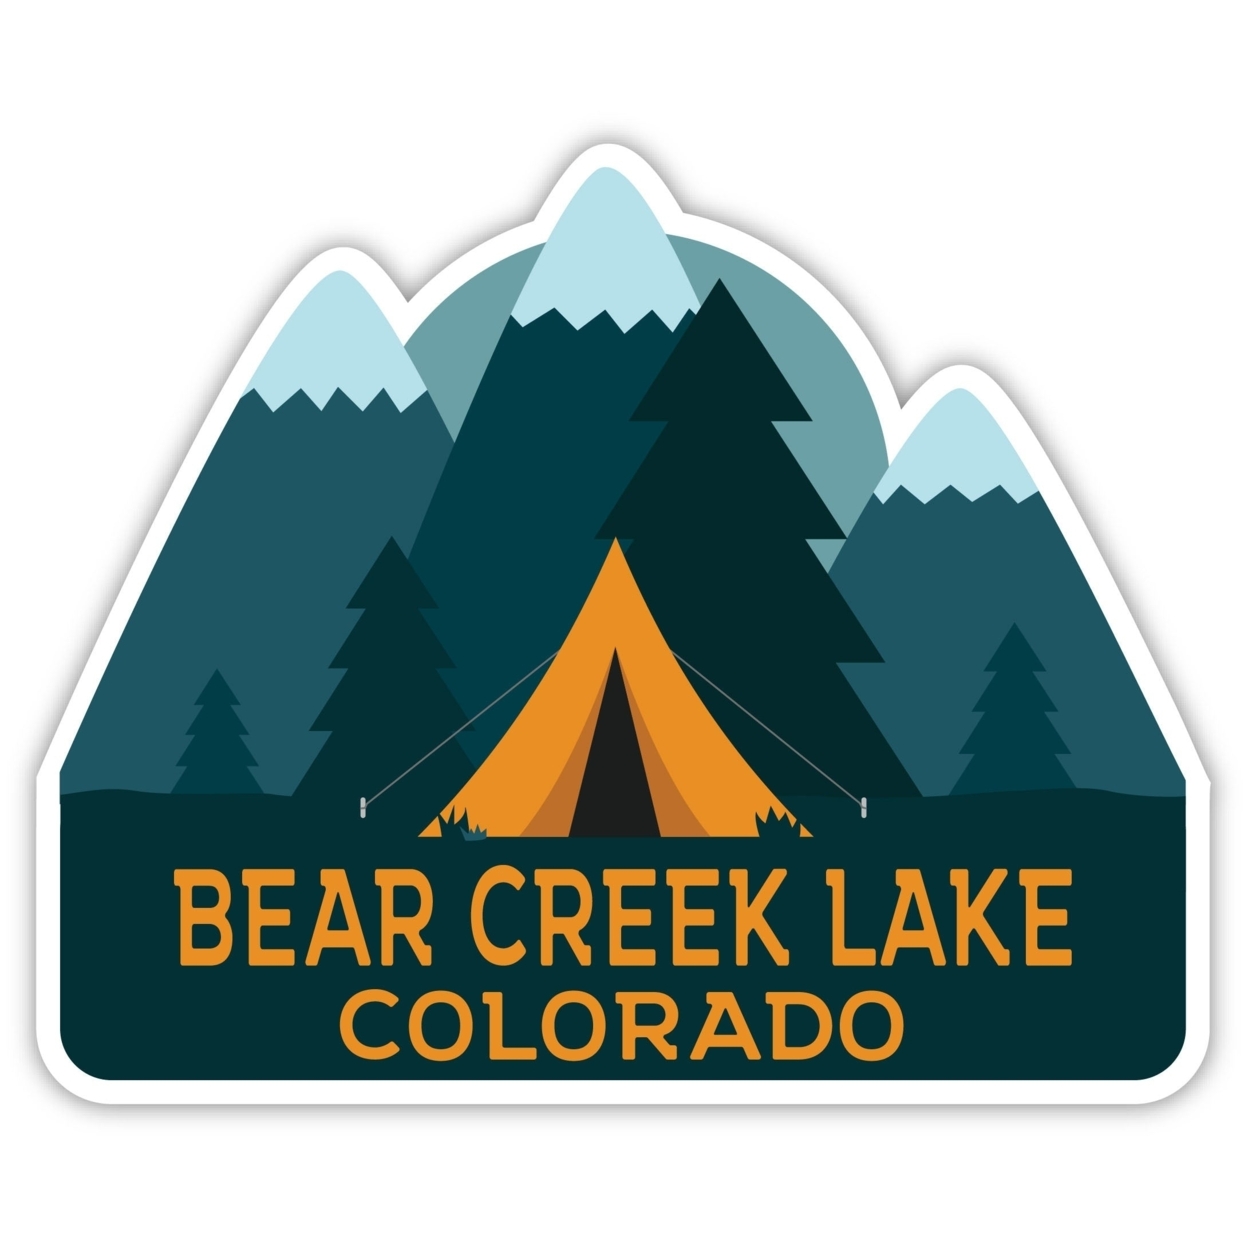 Bear Creek Lake Colorado Souvenir Decorative Stickers (Choose Theme And Size) - 4-Pack, 8-Inch, Tent